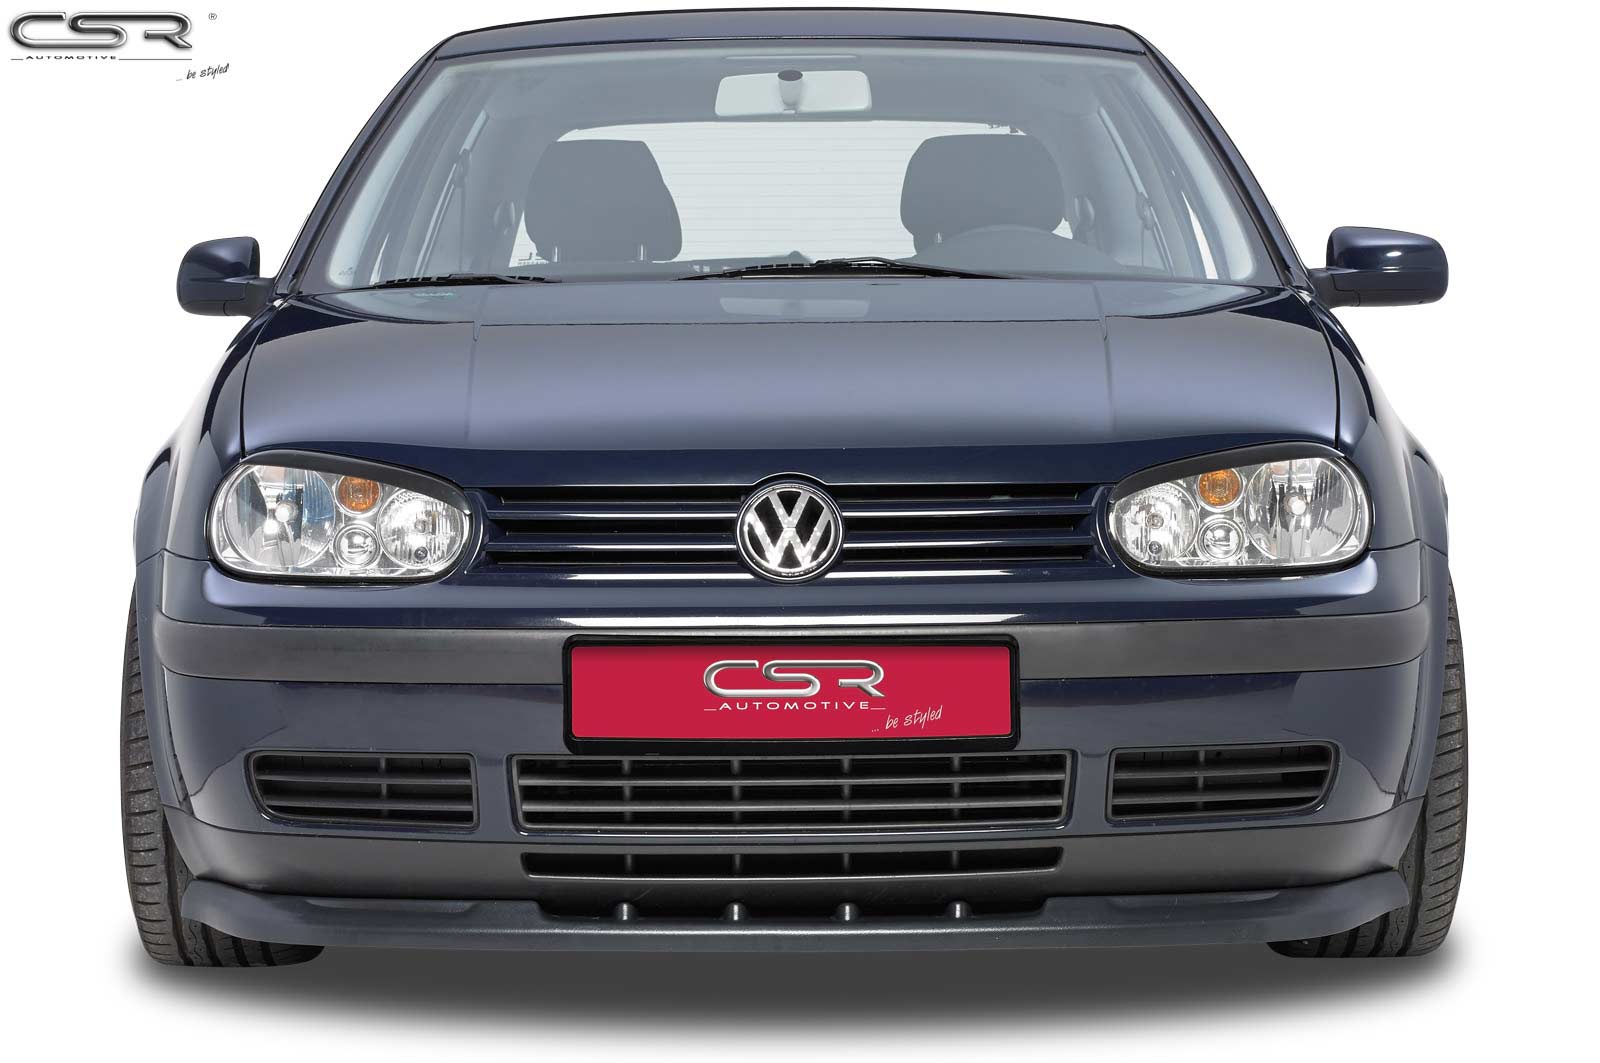 Фары гольф 4 купить. Volkswagen Golf 4 противотуманки. Бампер на Фольксваген гольф 4. Бампер VW Golf 4 HELLA. Golf 4 GTI 25 Anniversary.